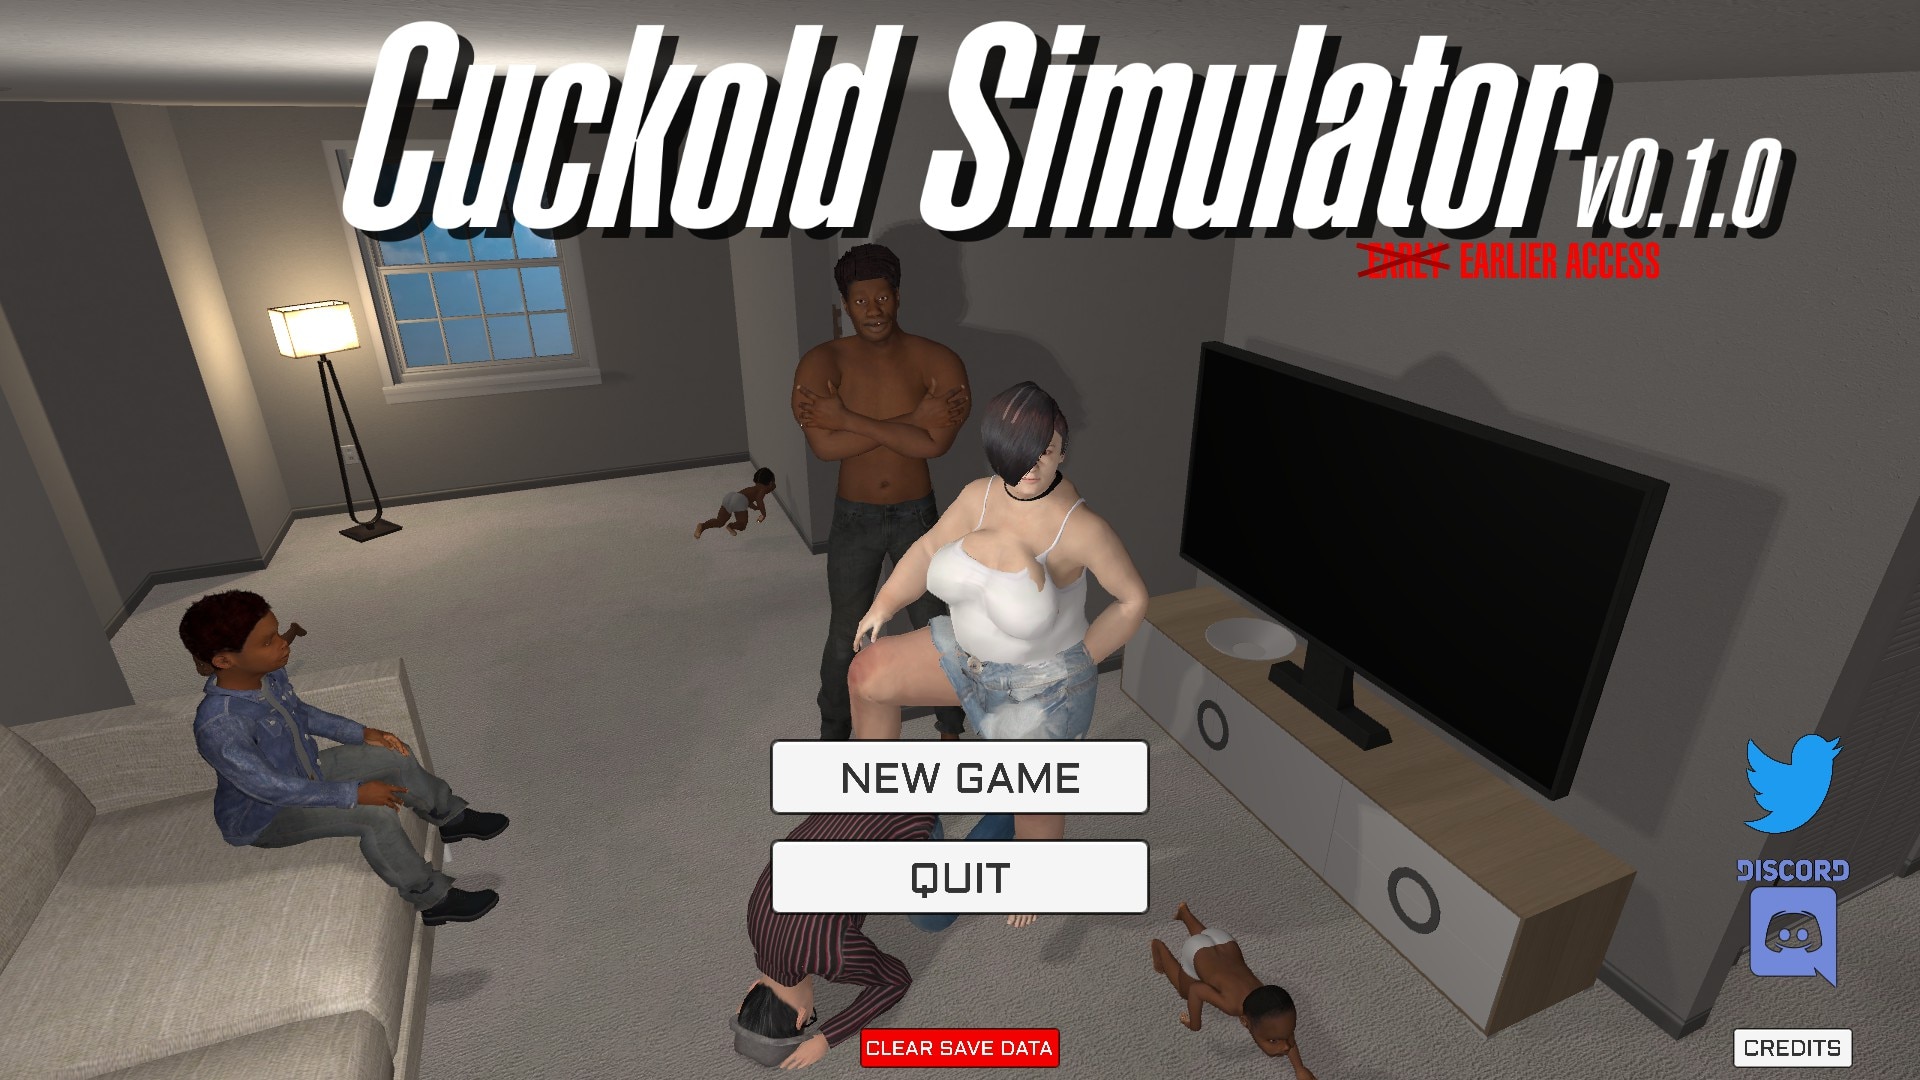 Cuck porn games